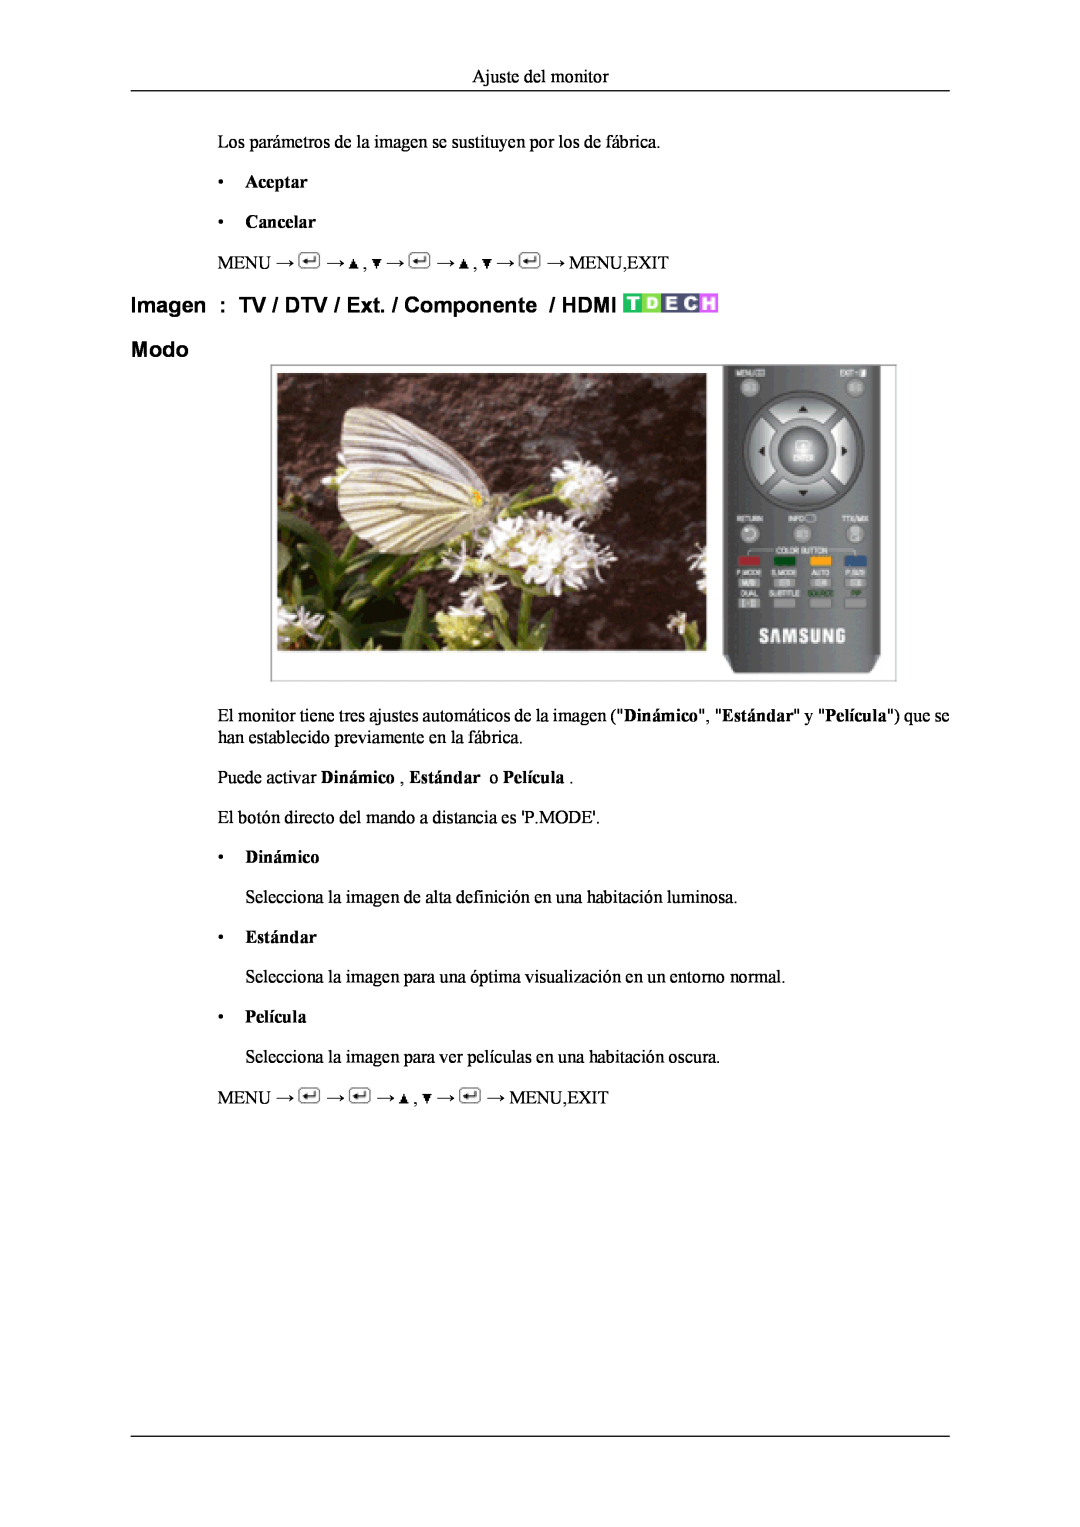 Samsung LS19CFEKF/EN manual Imagen TV / DTV / Ext. / Componente / HDMI Modo, Aceptar Cancelar, Dinámico, Estándar, Película 